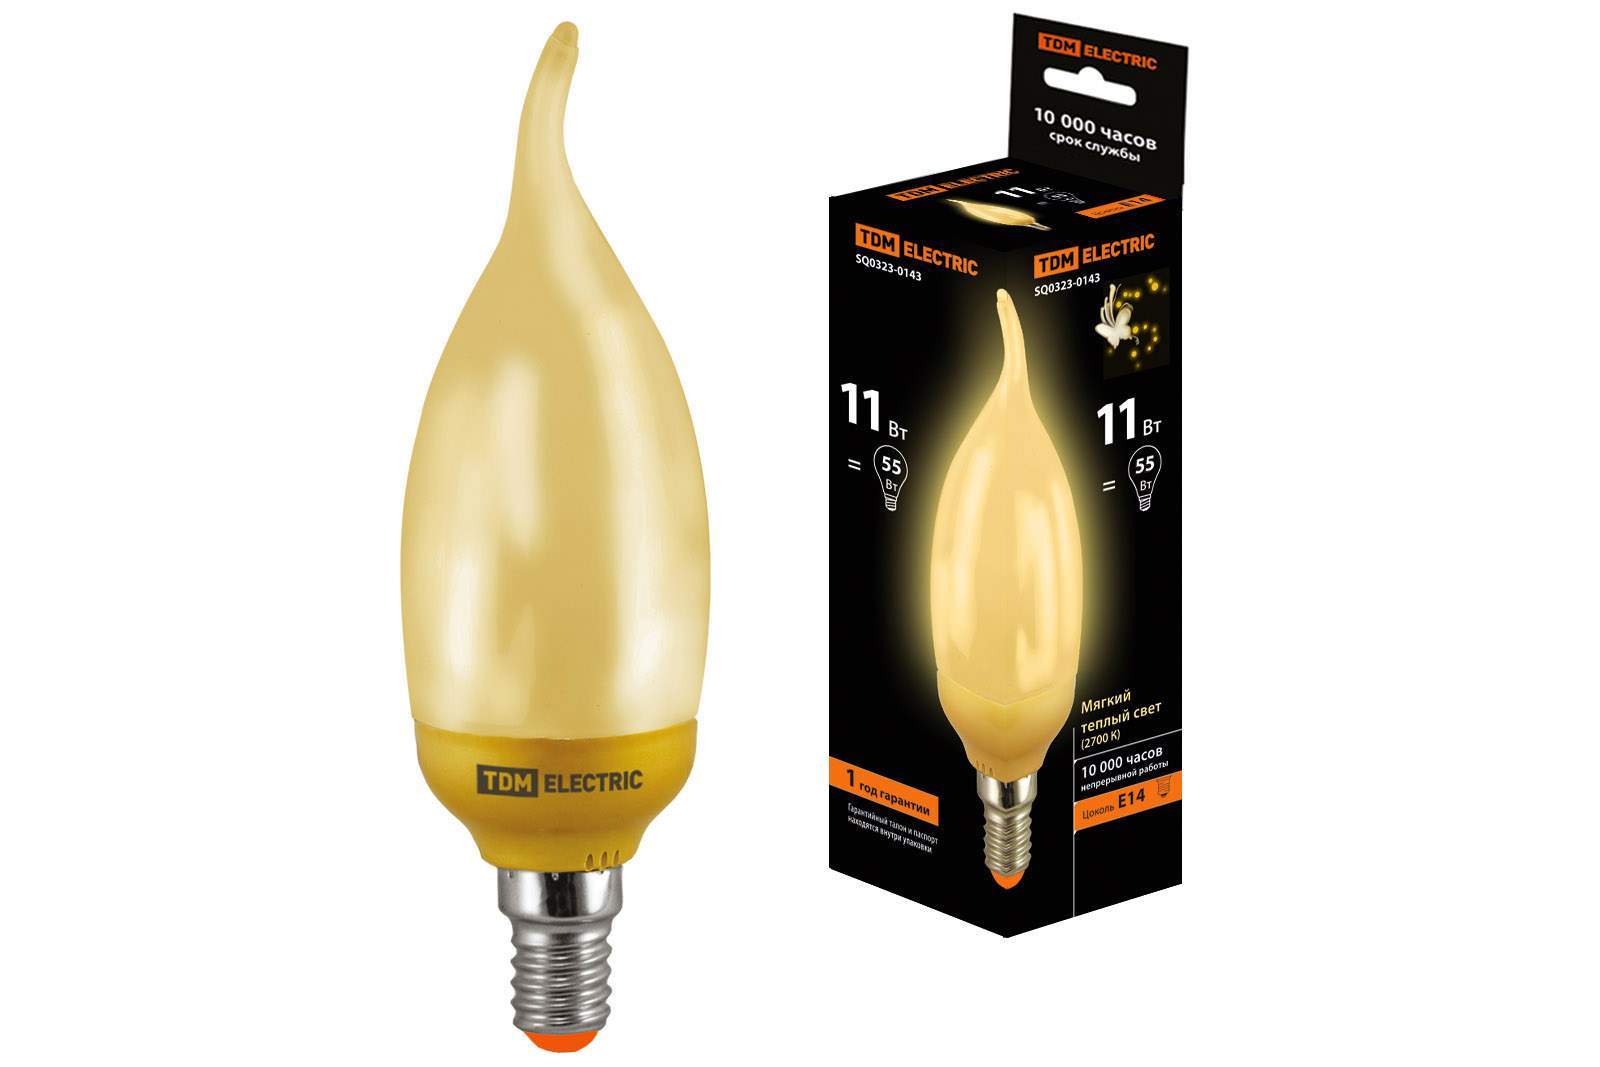 лампа энергосберегающая клл-сgw-11 вт-2700 к–е14 tdm (золотая свеча на ветру) (mini) от BTSprom.by